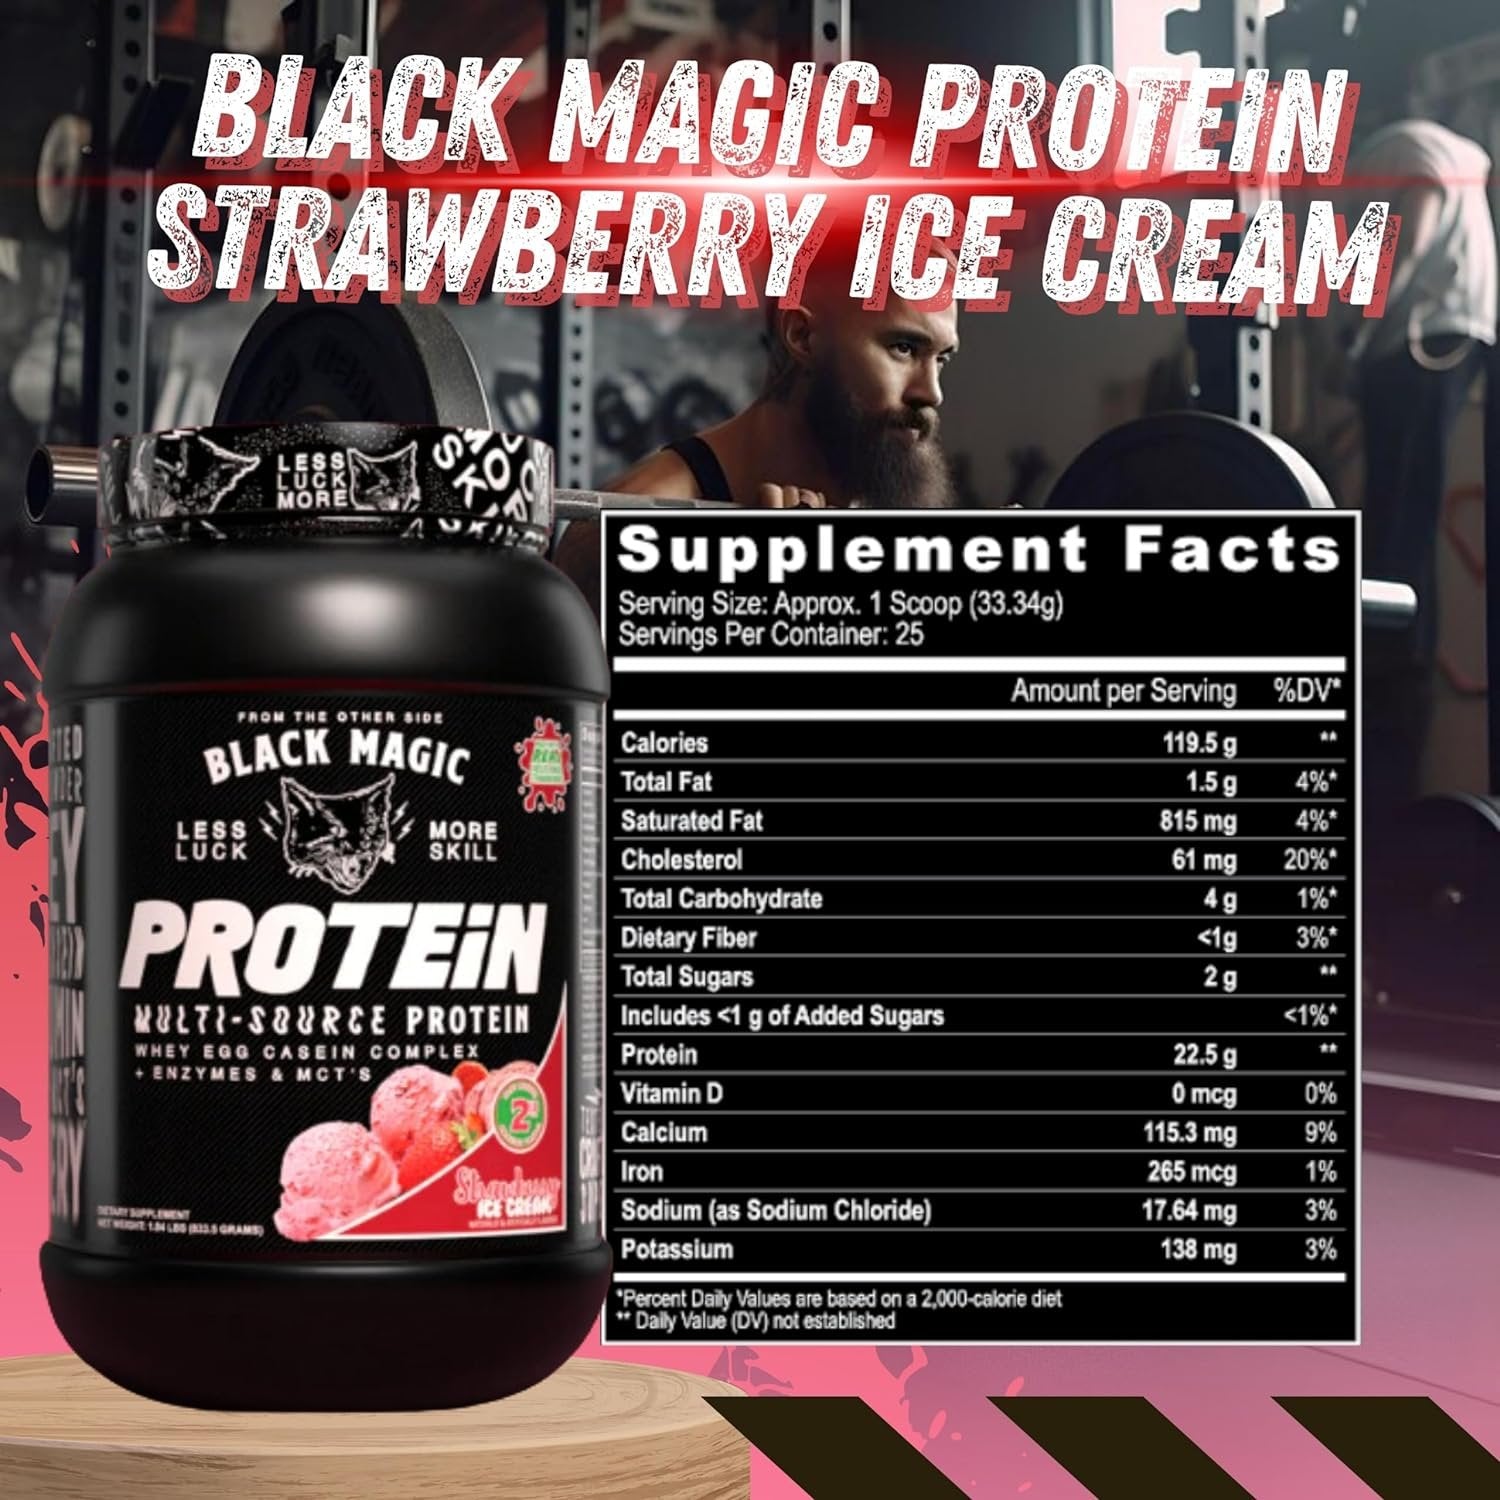 Black Magic Supply Multi- Source Protein Powder - Whey Egg Casein Complex - Enzymes & MCT's - Strawberry Ice Cream Flavor - 2 lbs